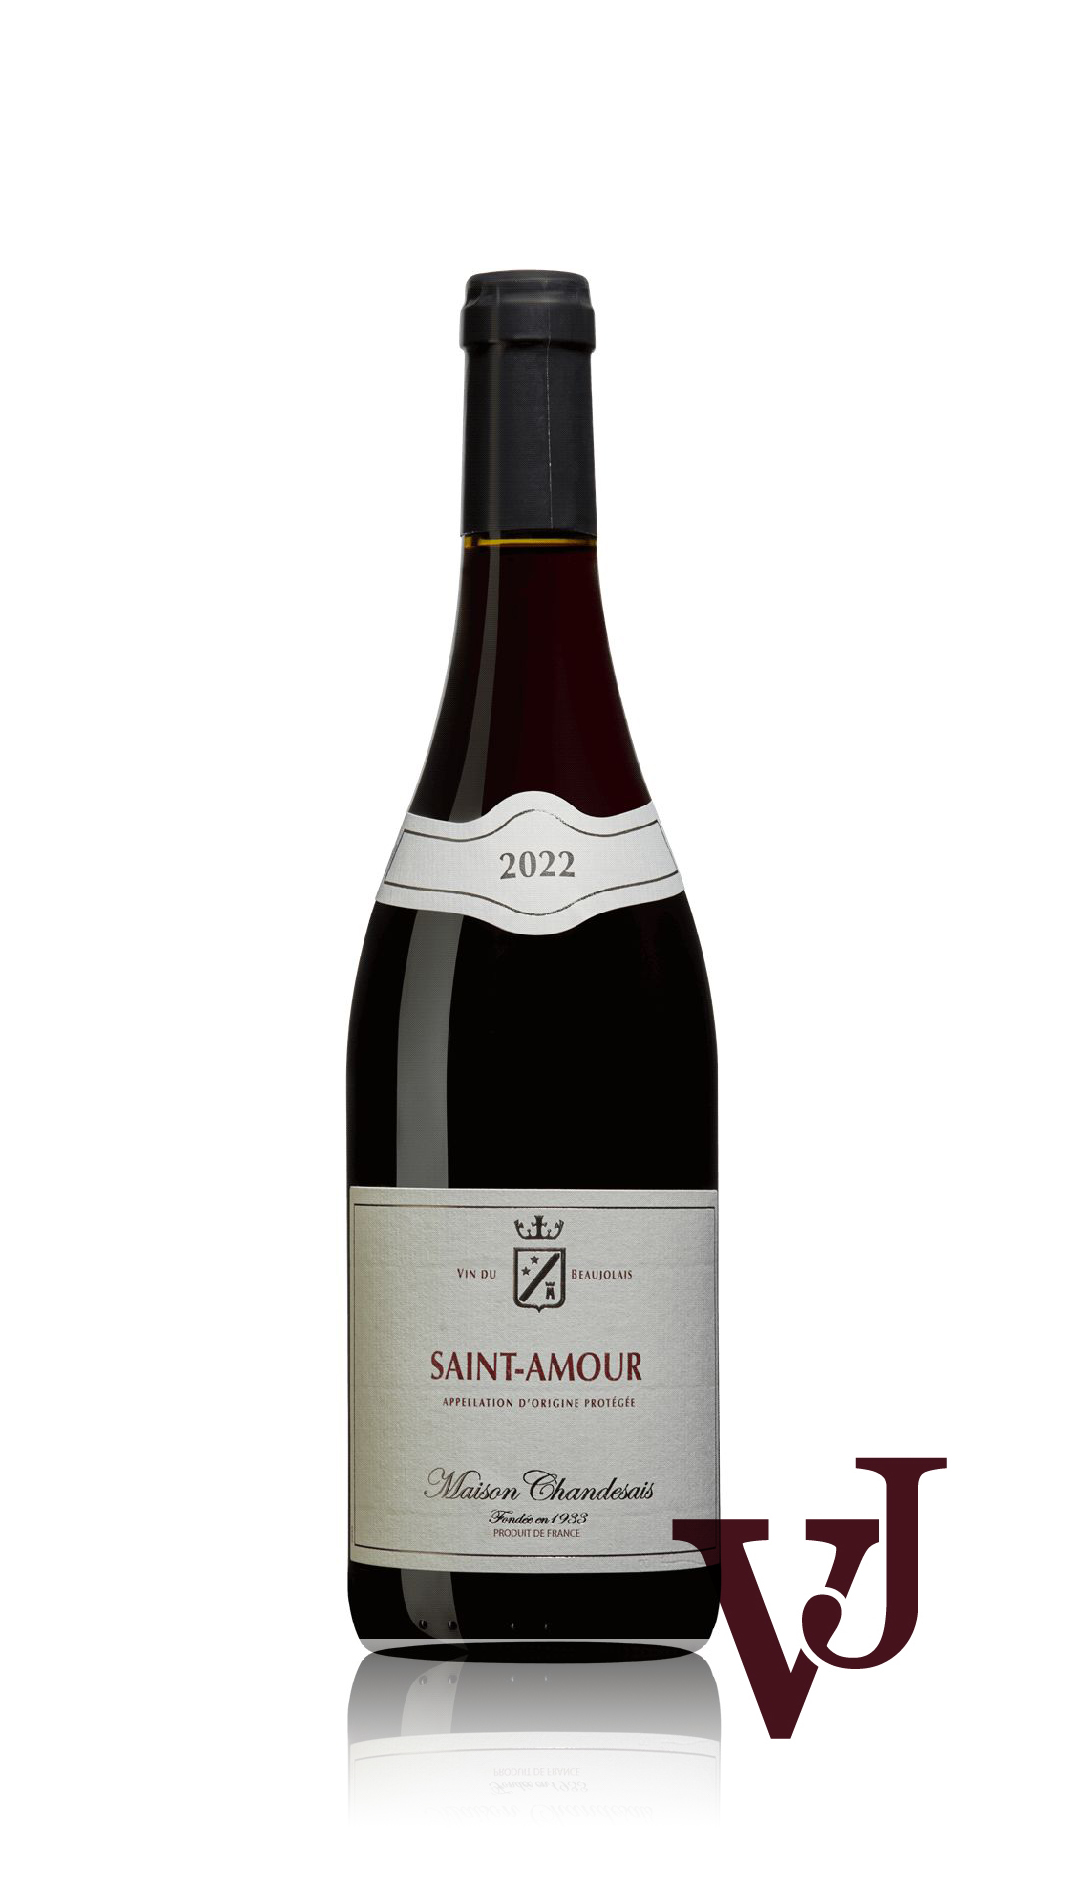 Rött Vin - Maison Chandesais Saint-Amour 2022 artikel nummer 9443301 från producenten Compagnie Vinicole de Bourgogne från Frankrike